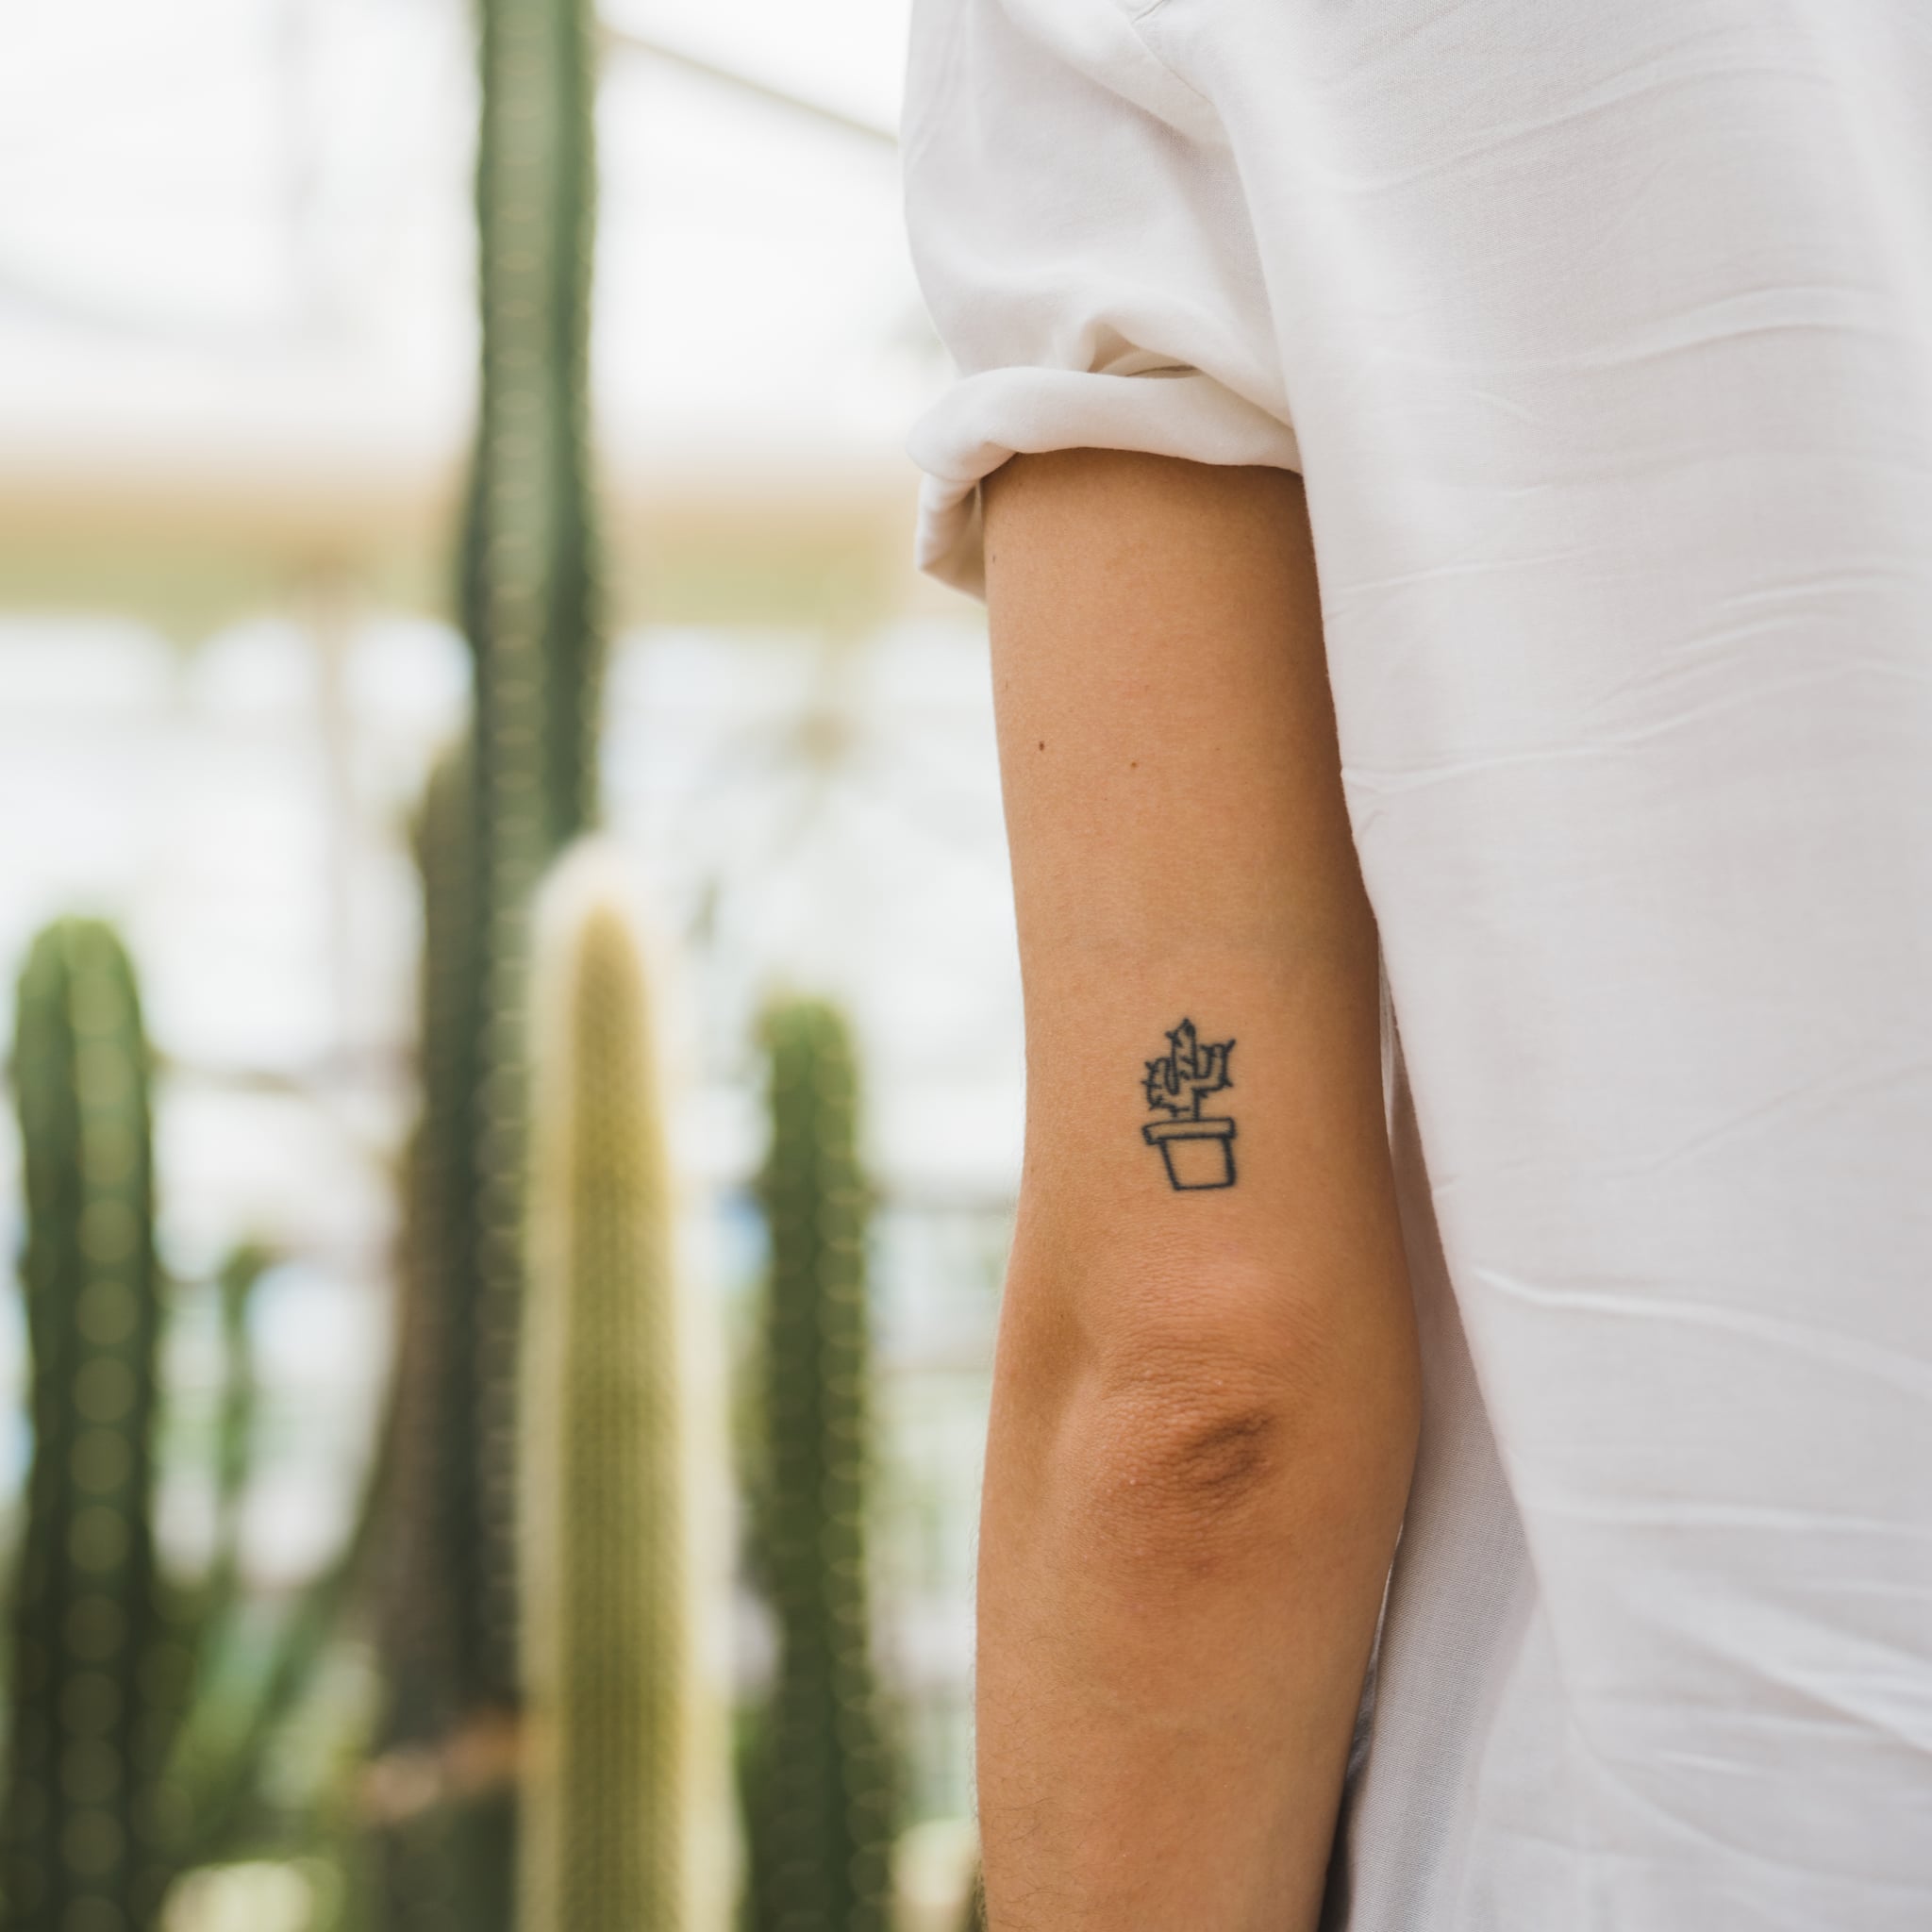 Bicep Tattoos: Ideas and Photo Inspiration | POPSUGAR Beauty